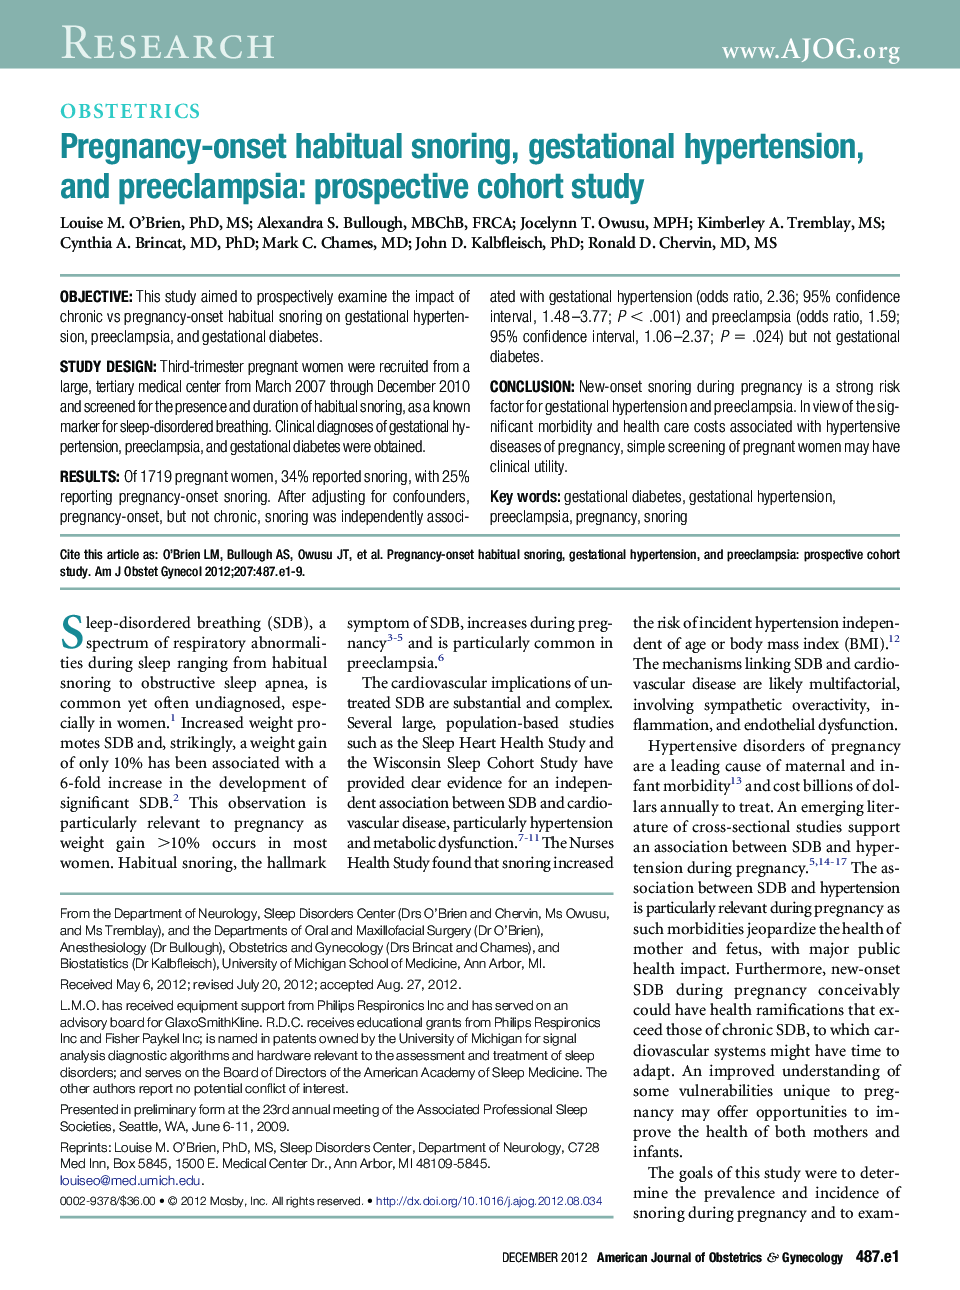 Pregnancy-onset habitual snoring, gestational hypertension, and preeclampsia: prospective cohort study